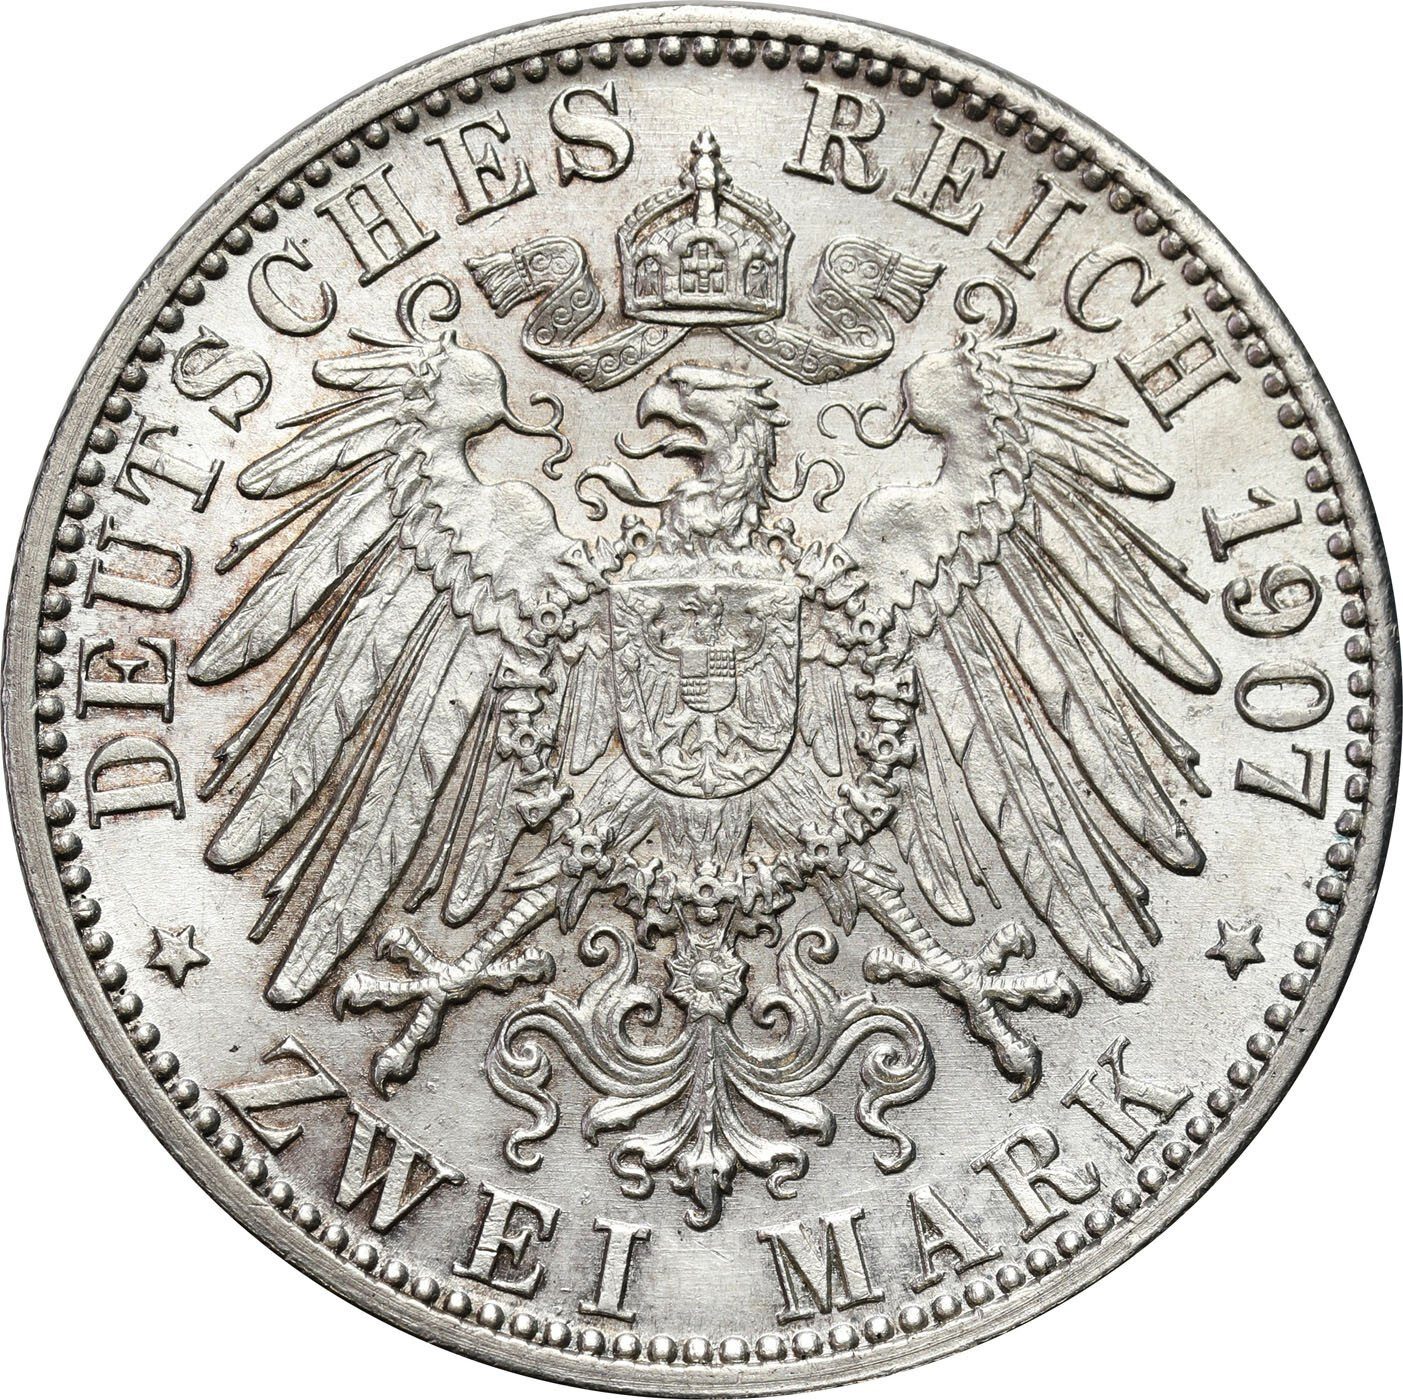  Niemcy. Badenia. 2 marki 1907 G, Karlsruhe